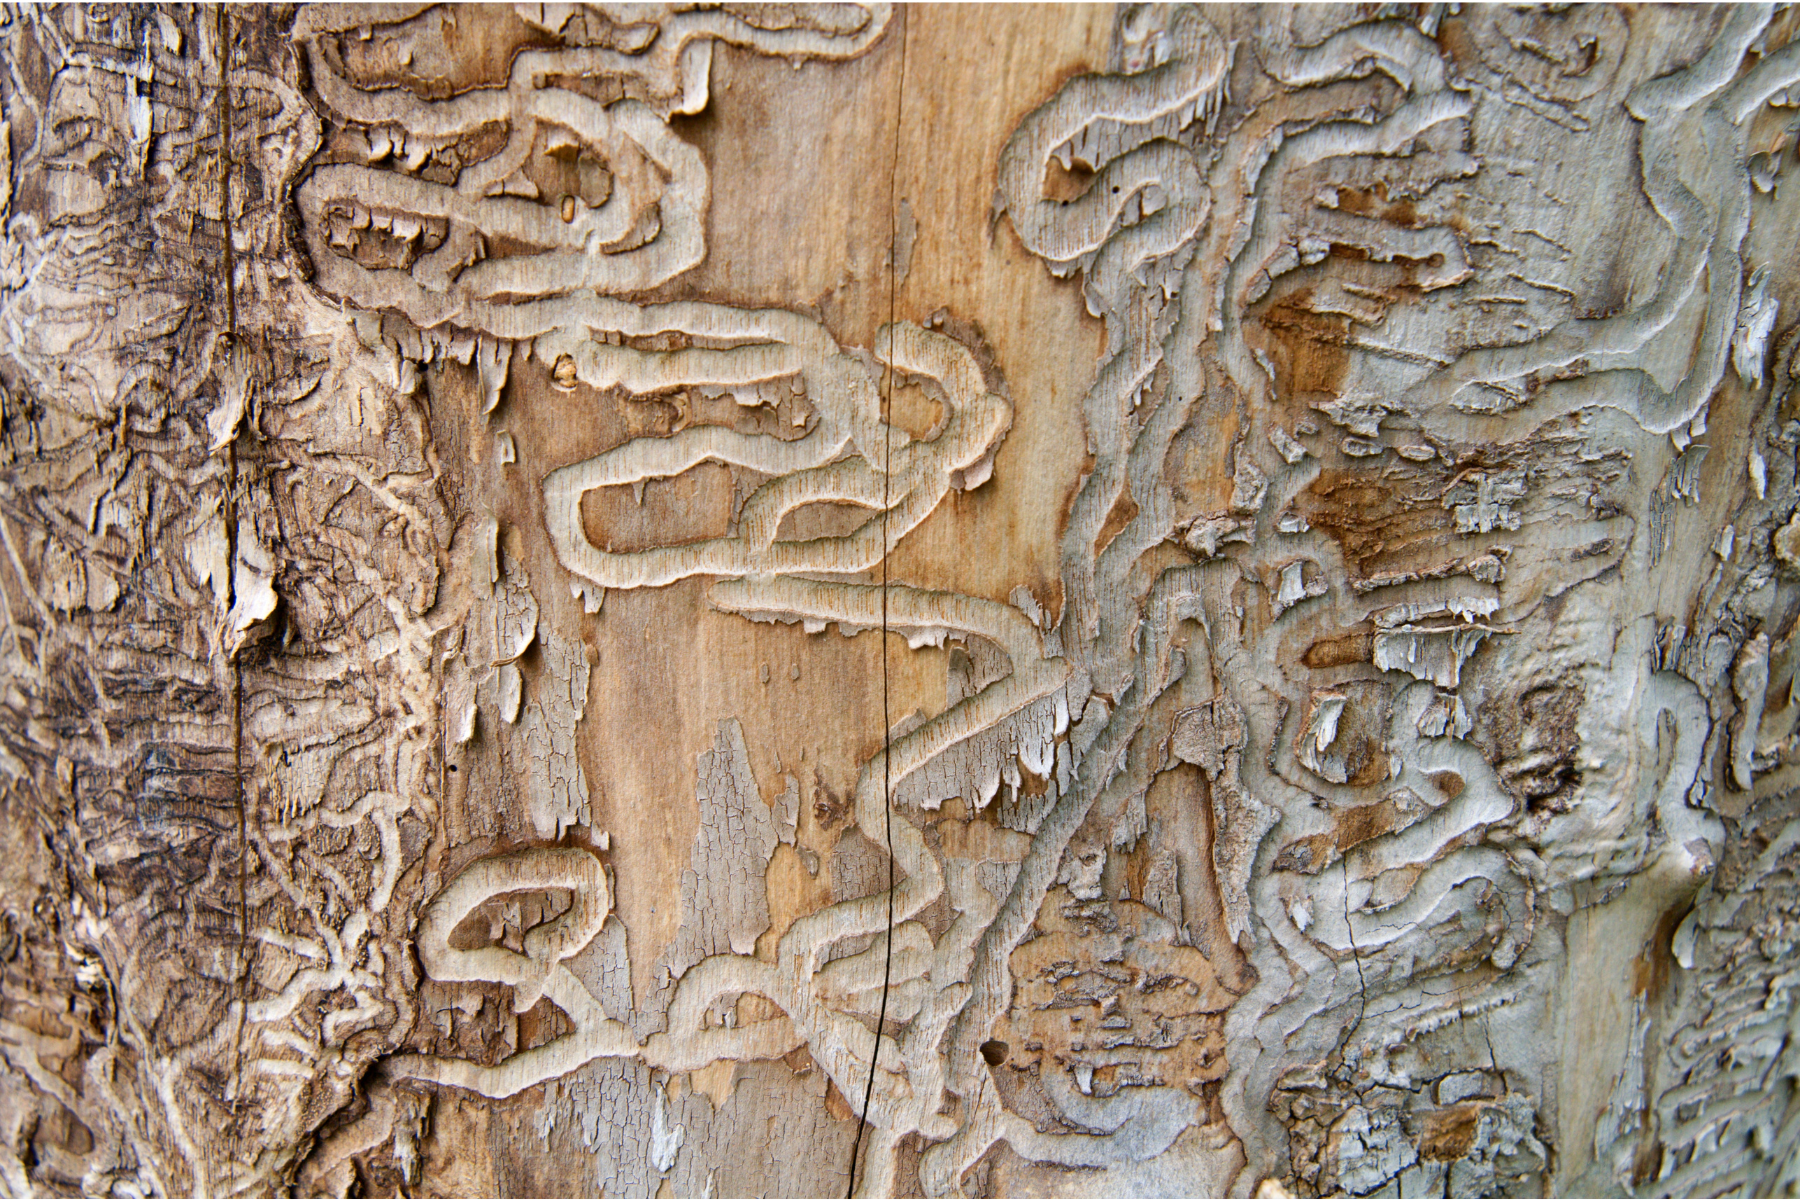 S-Shaped galleries of Emerald ash borer larva.